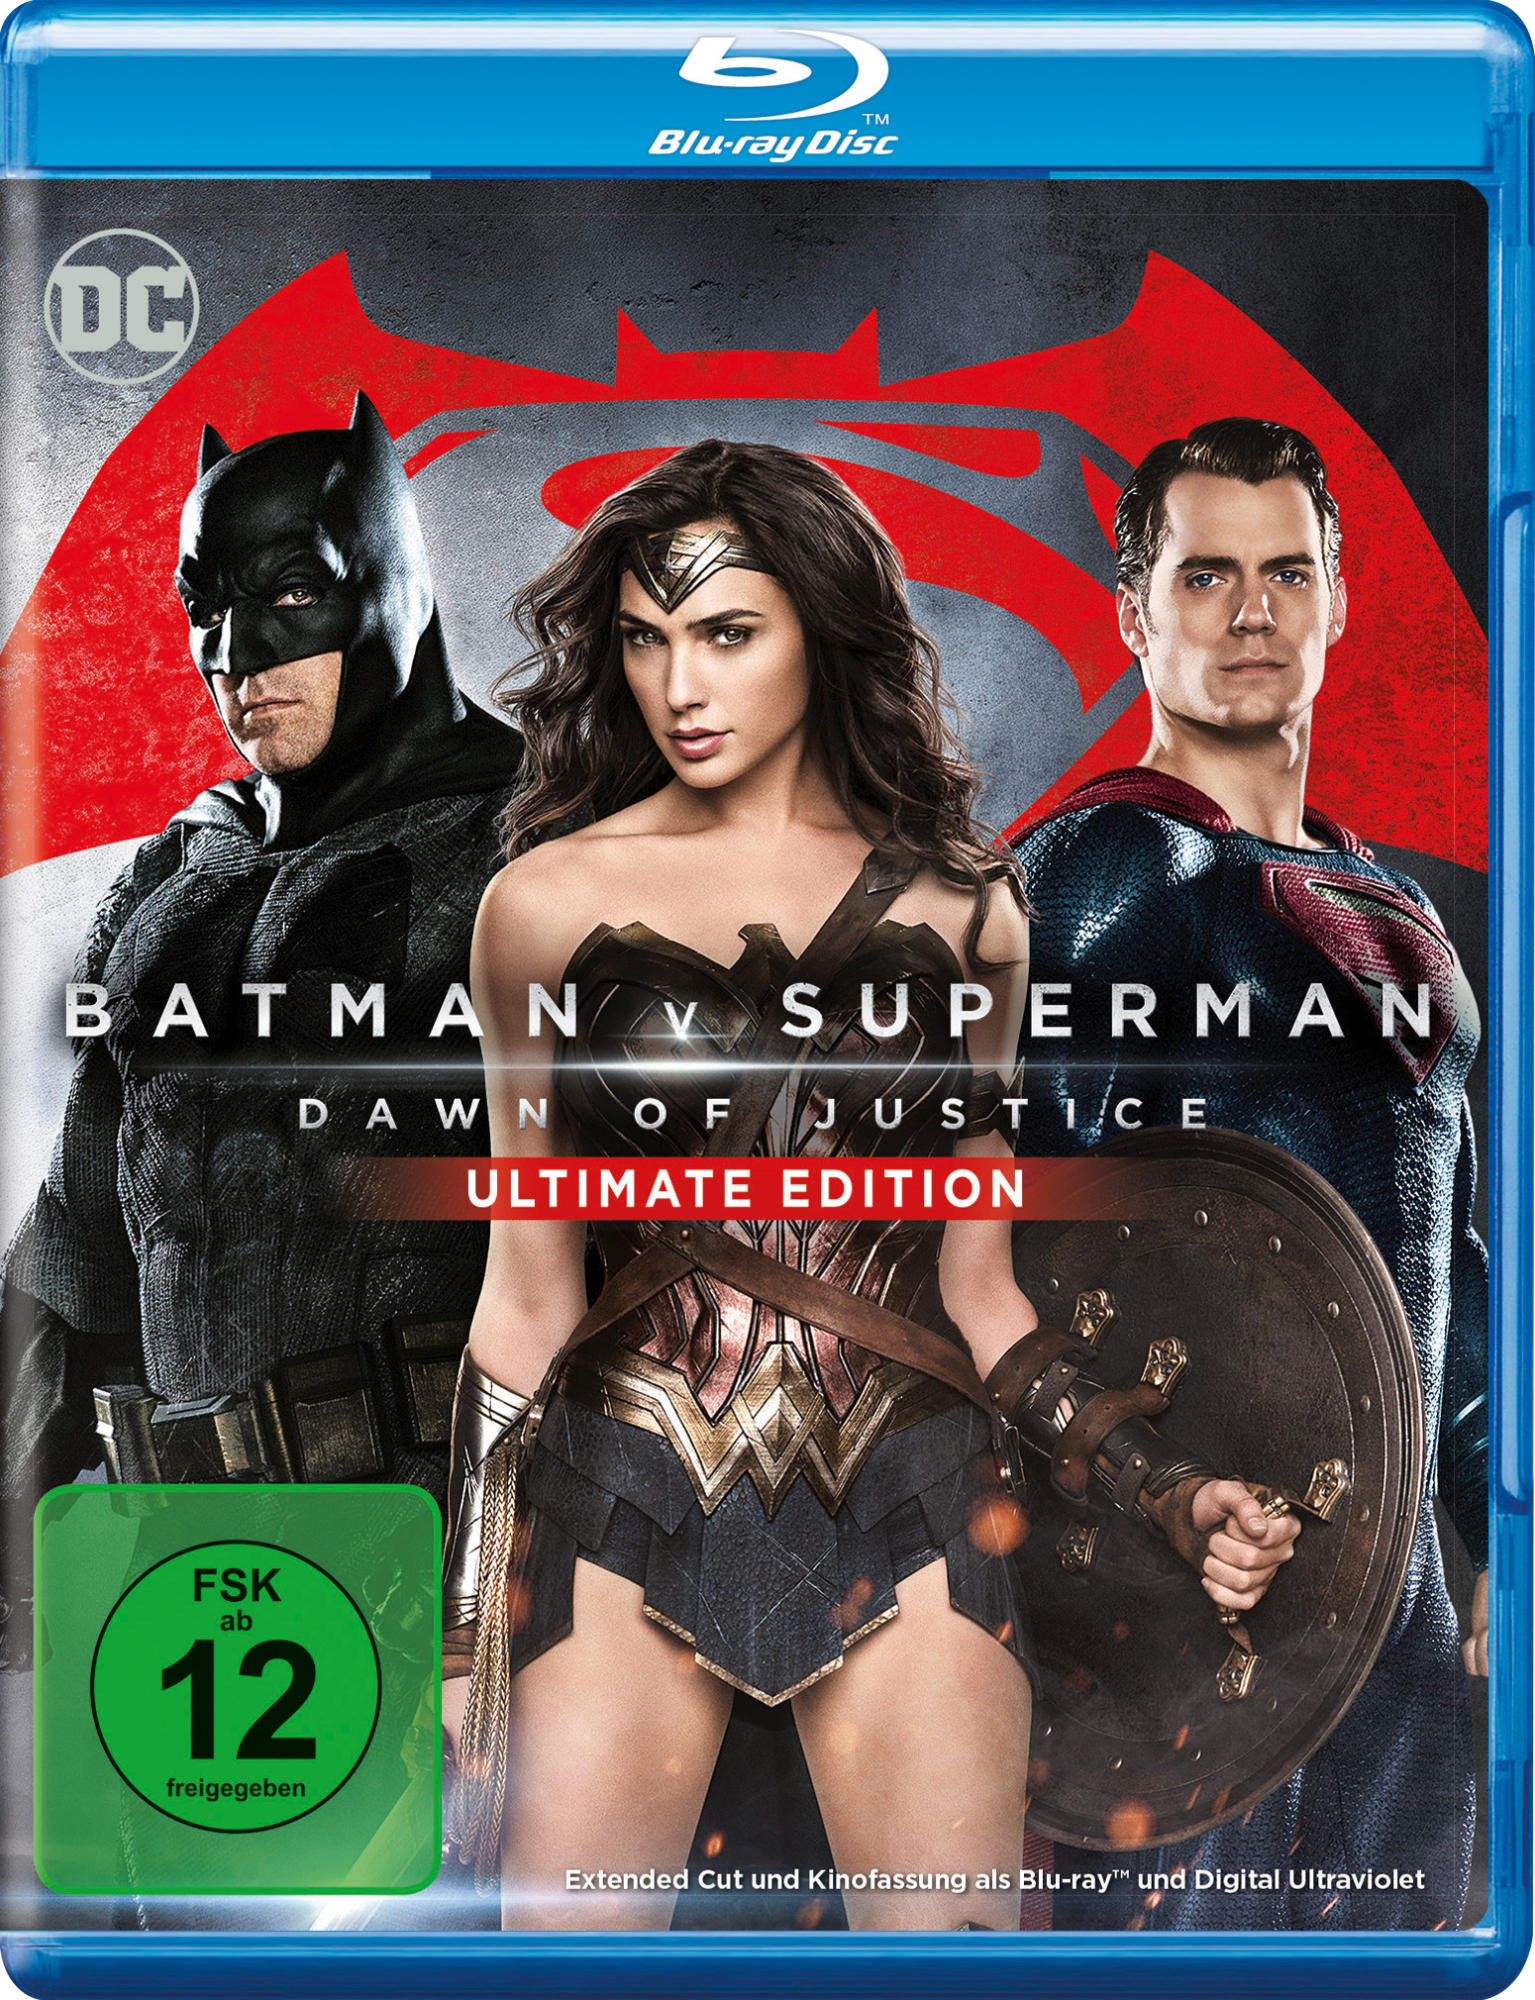 of Edition) Dawn Batman Superman: Blu-ray (Ultimate Justice v